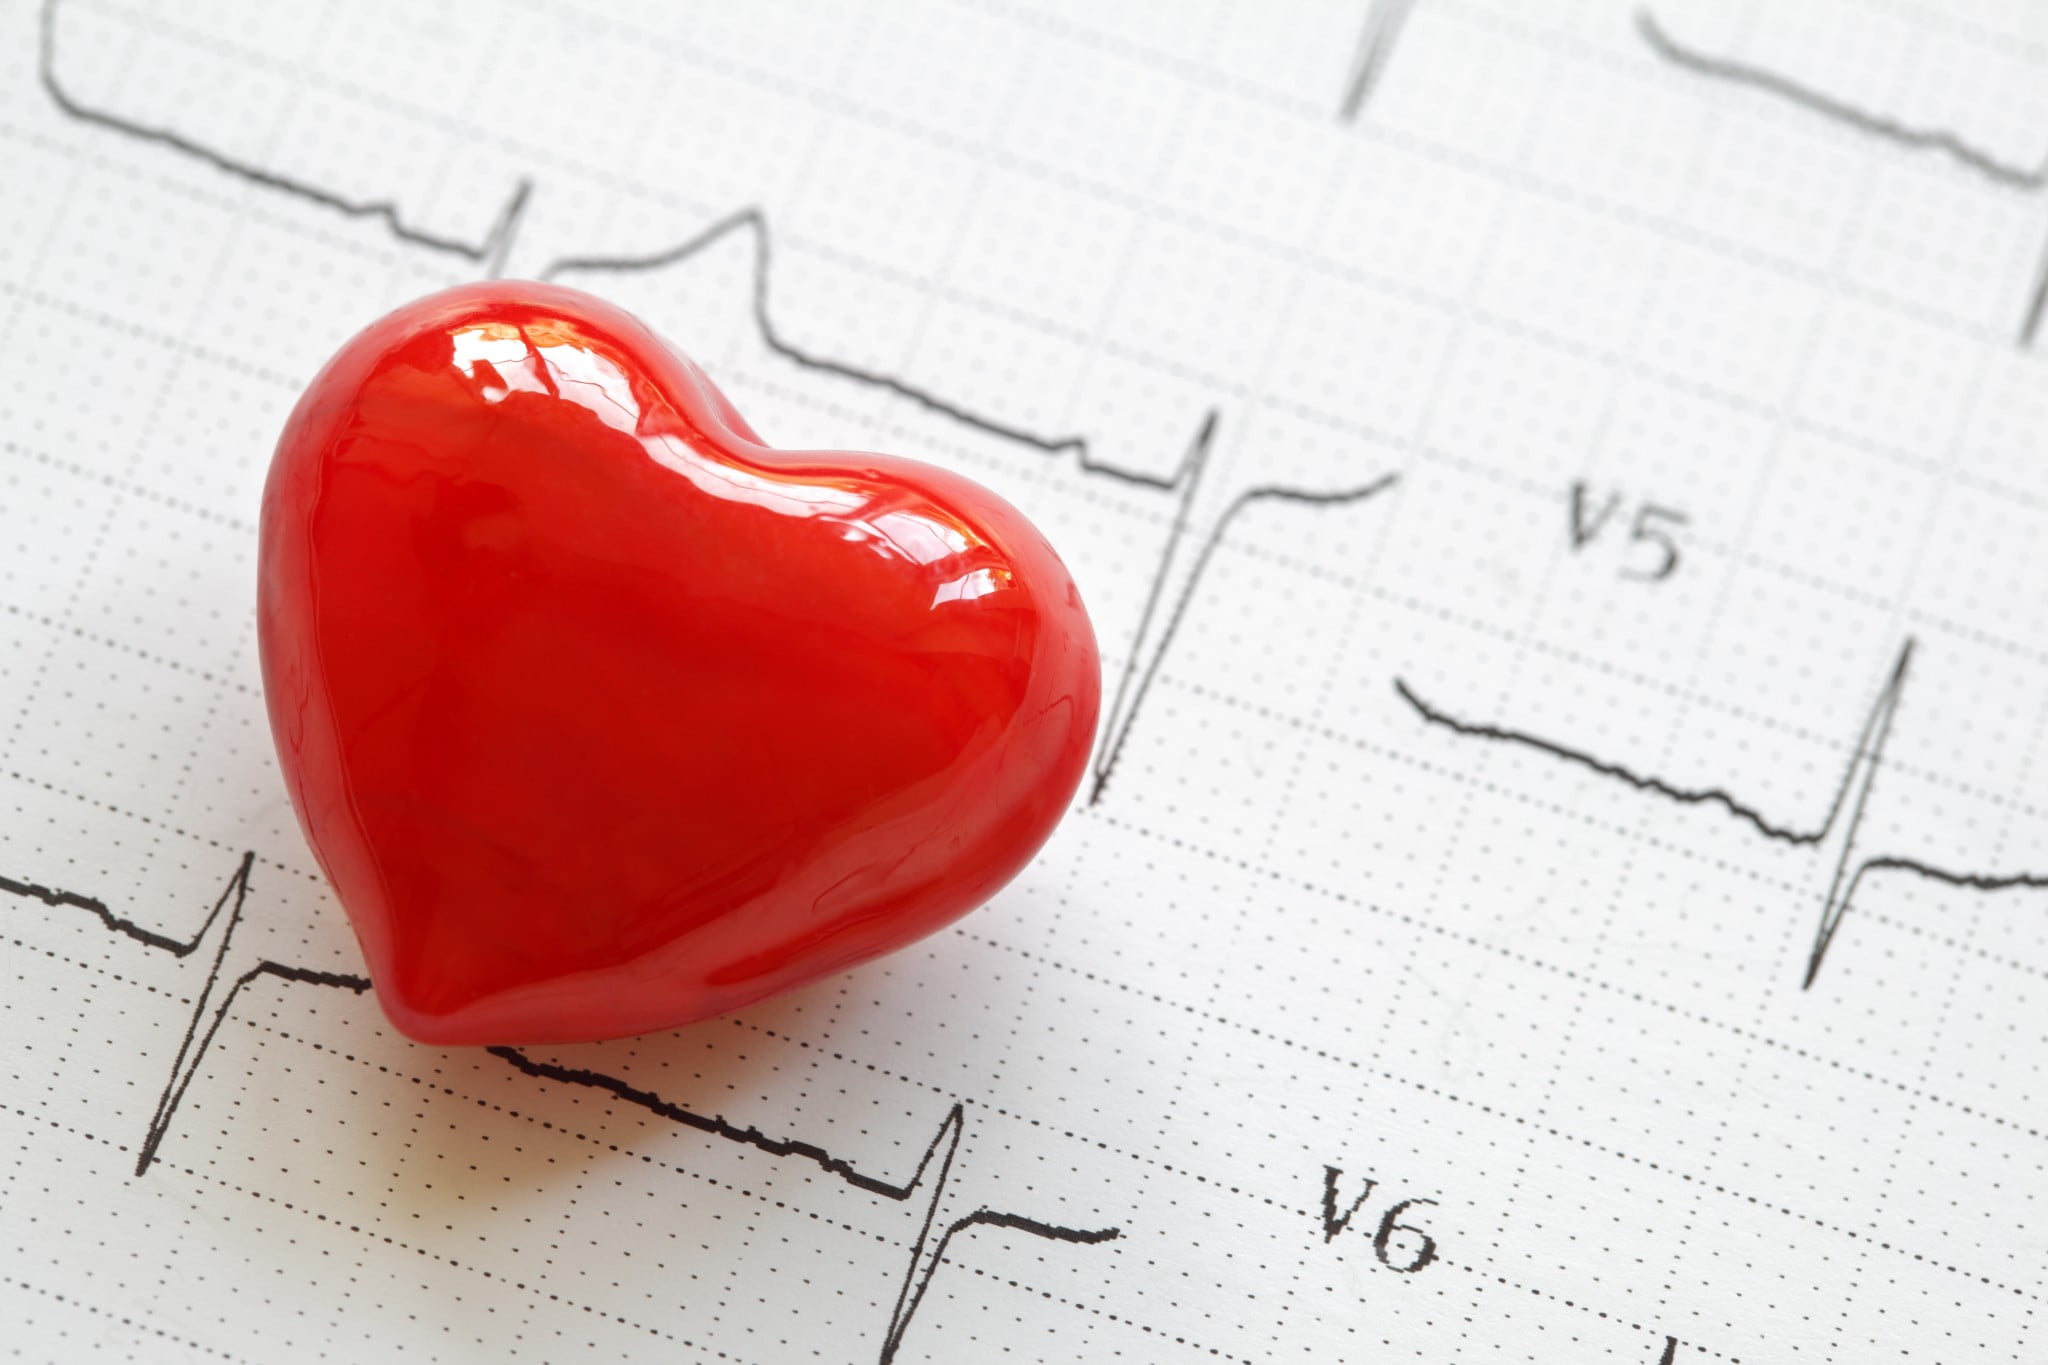 cholesterol: heart on ecg graph